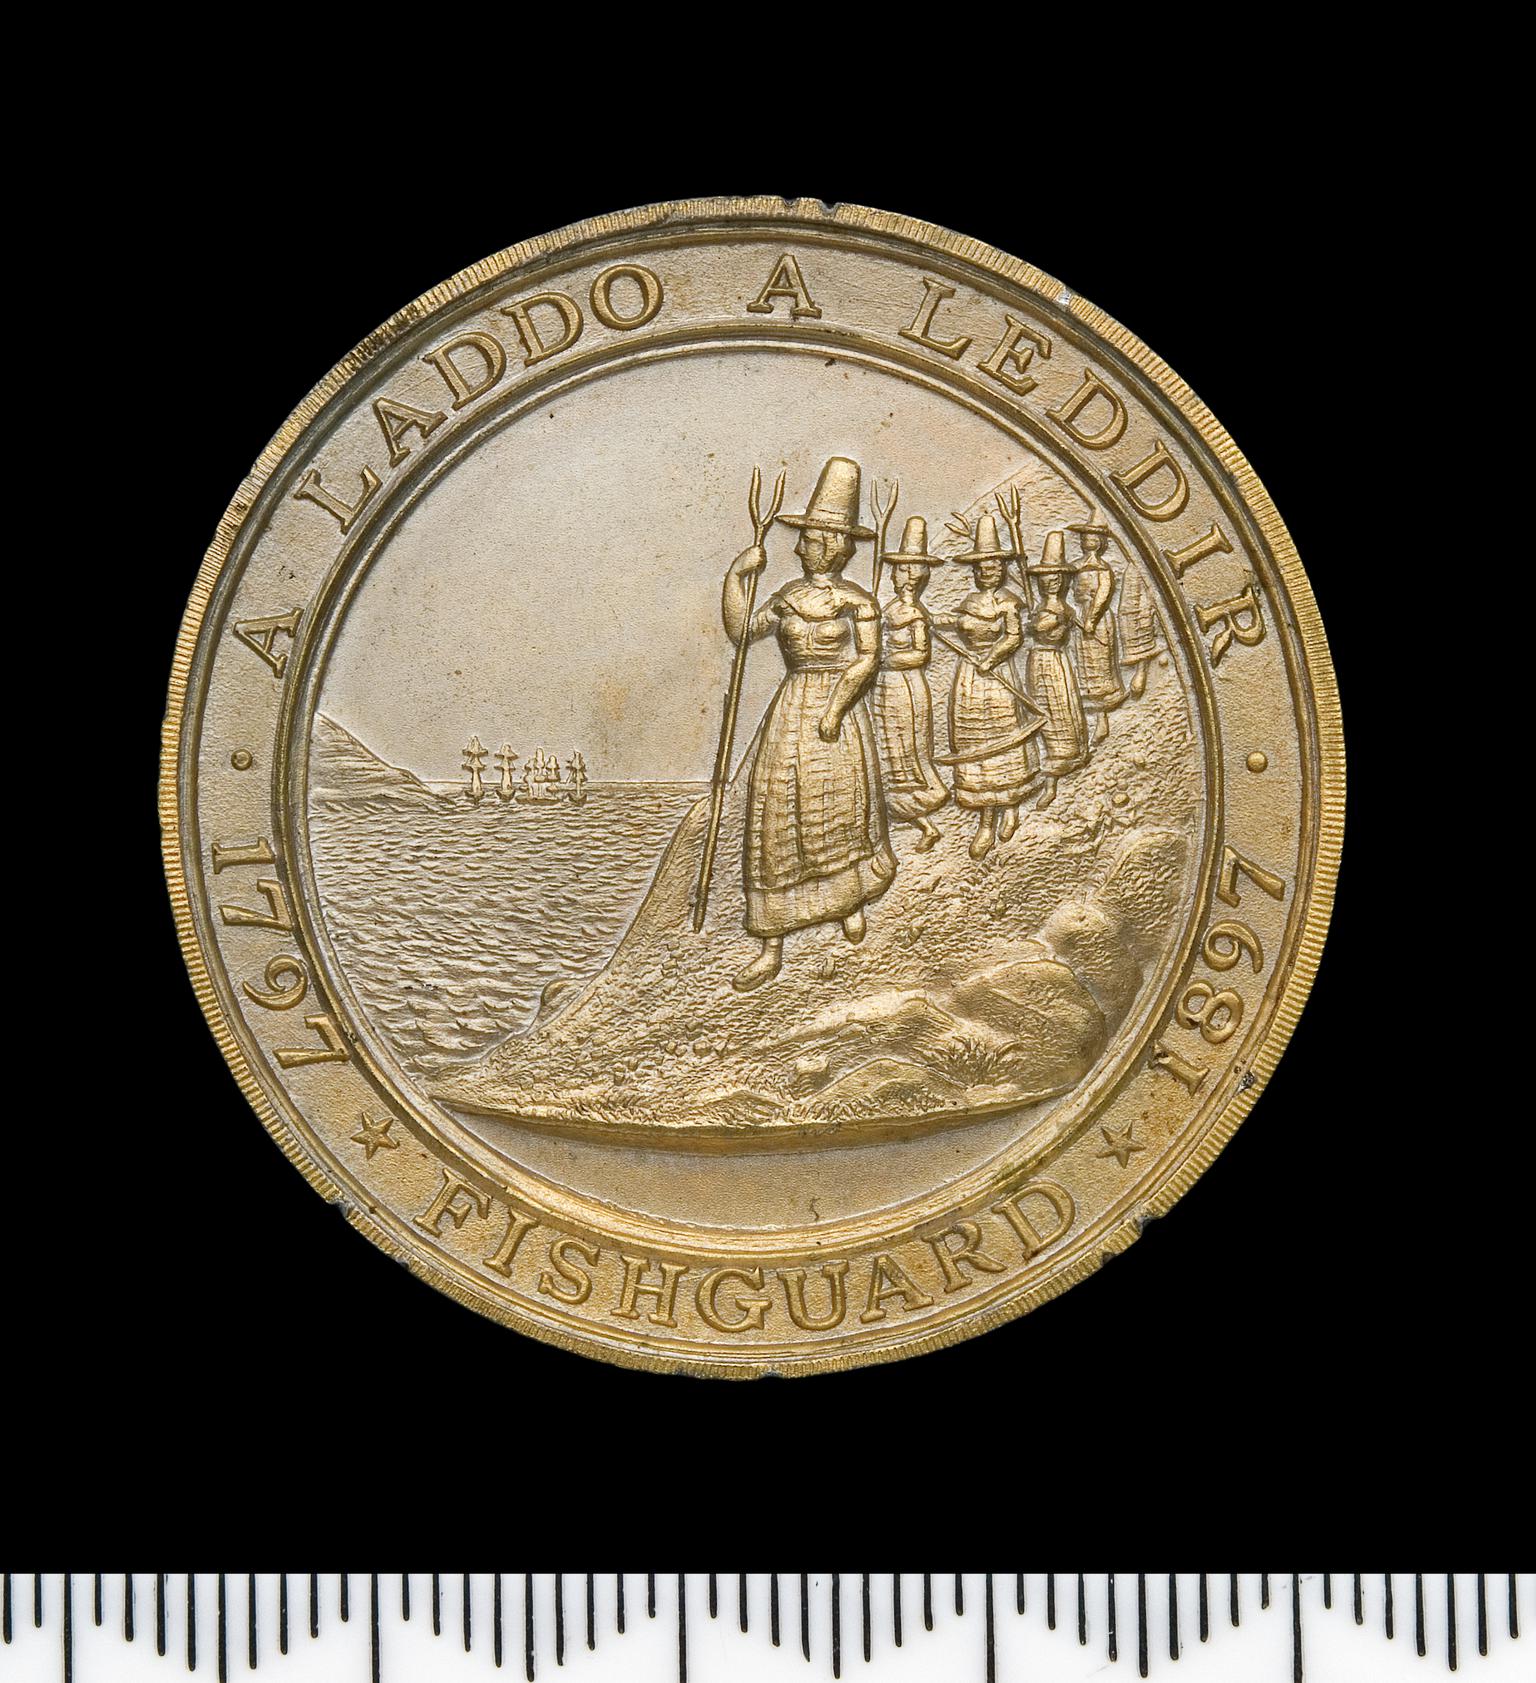 Medal; Fishguard invasion centenary